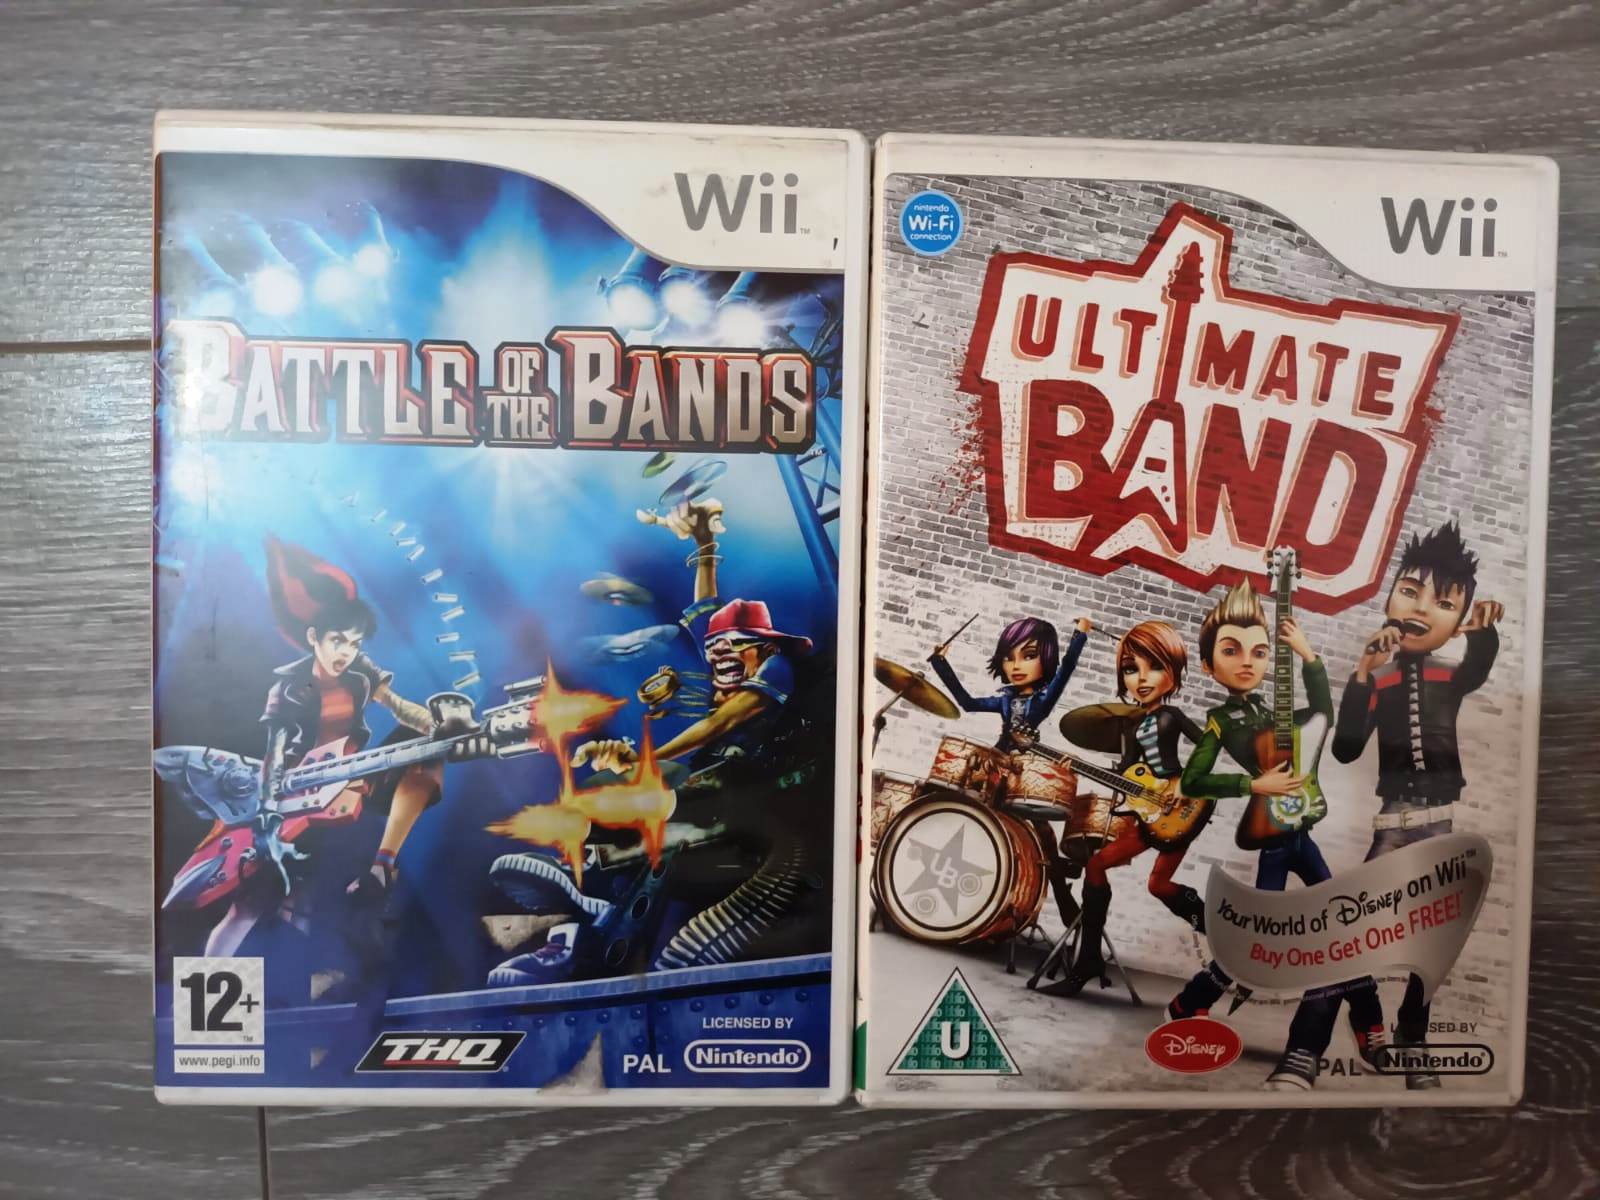 Joc Nintendo Wii Battle of the bands + Ultimate band